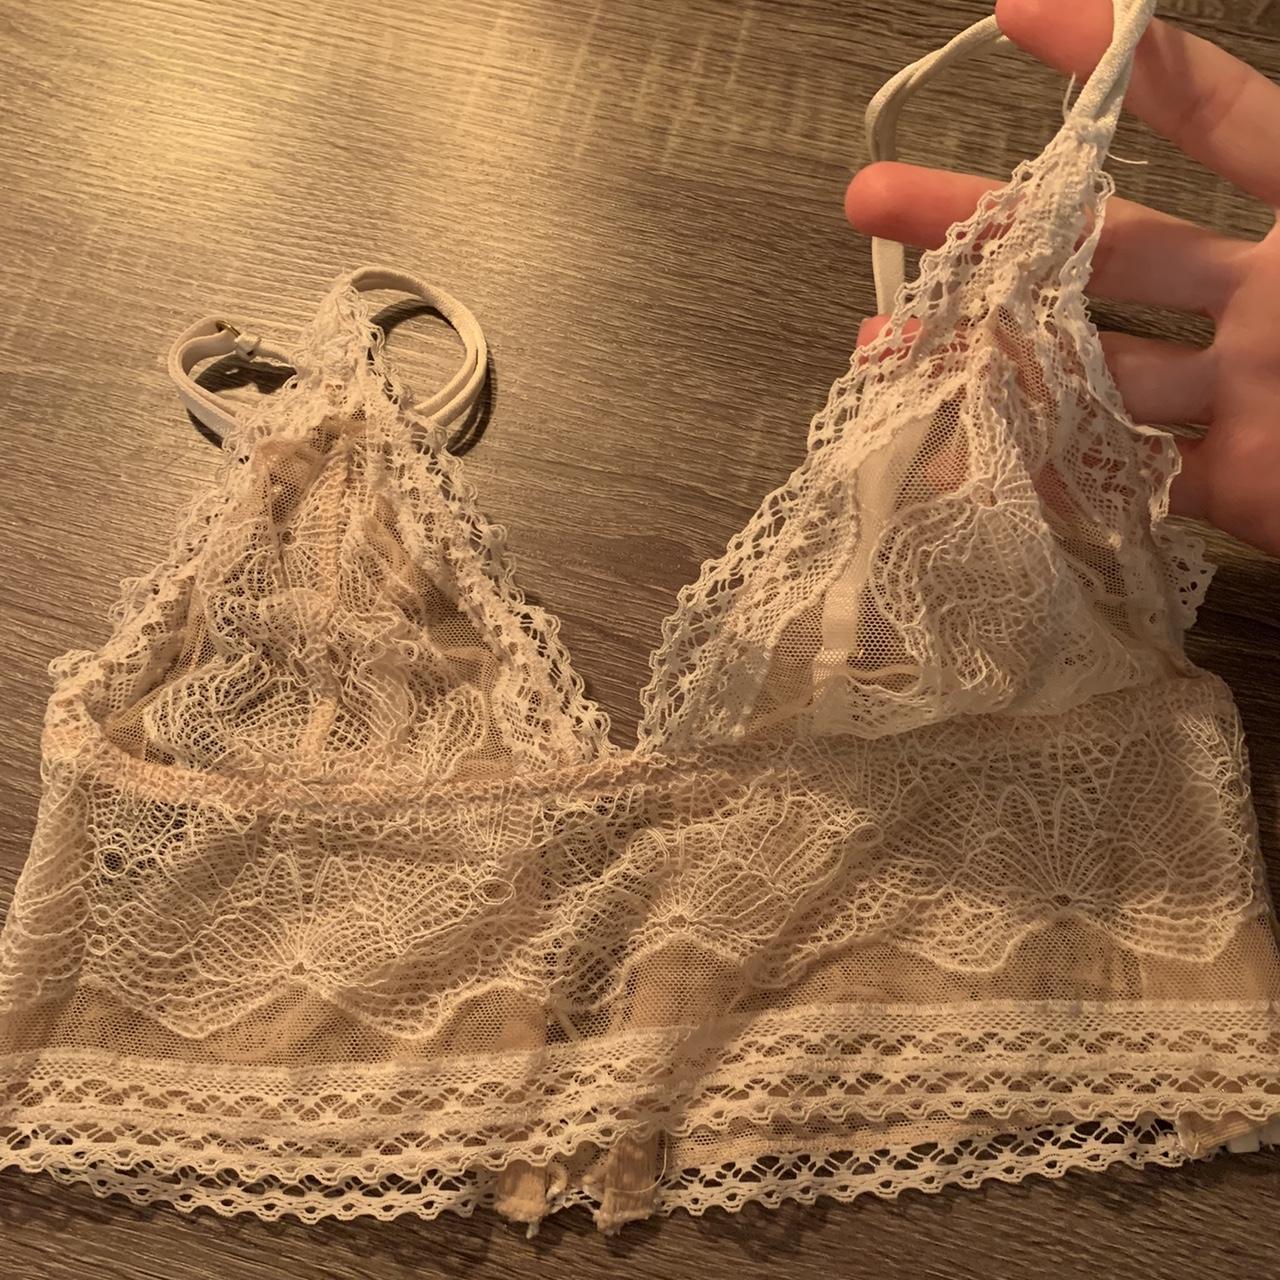 Victoria’s secret lace bralette. the detail on this